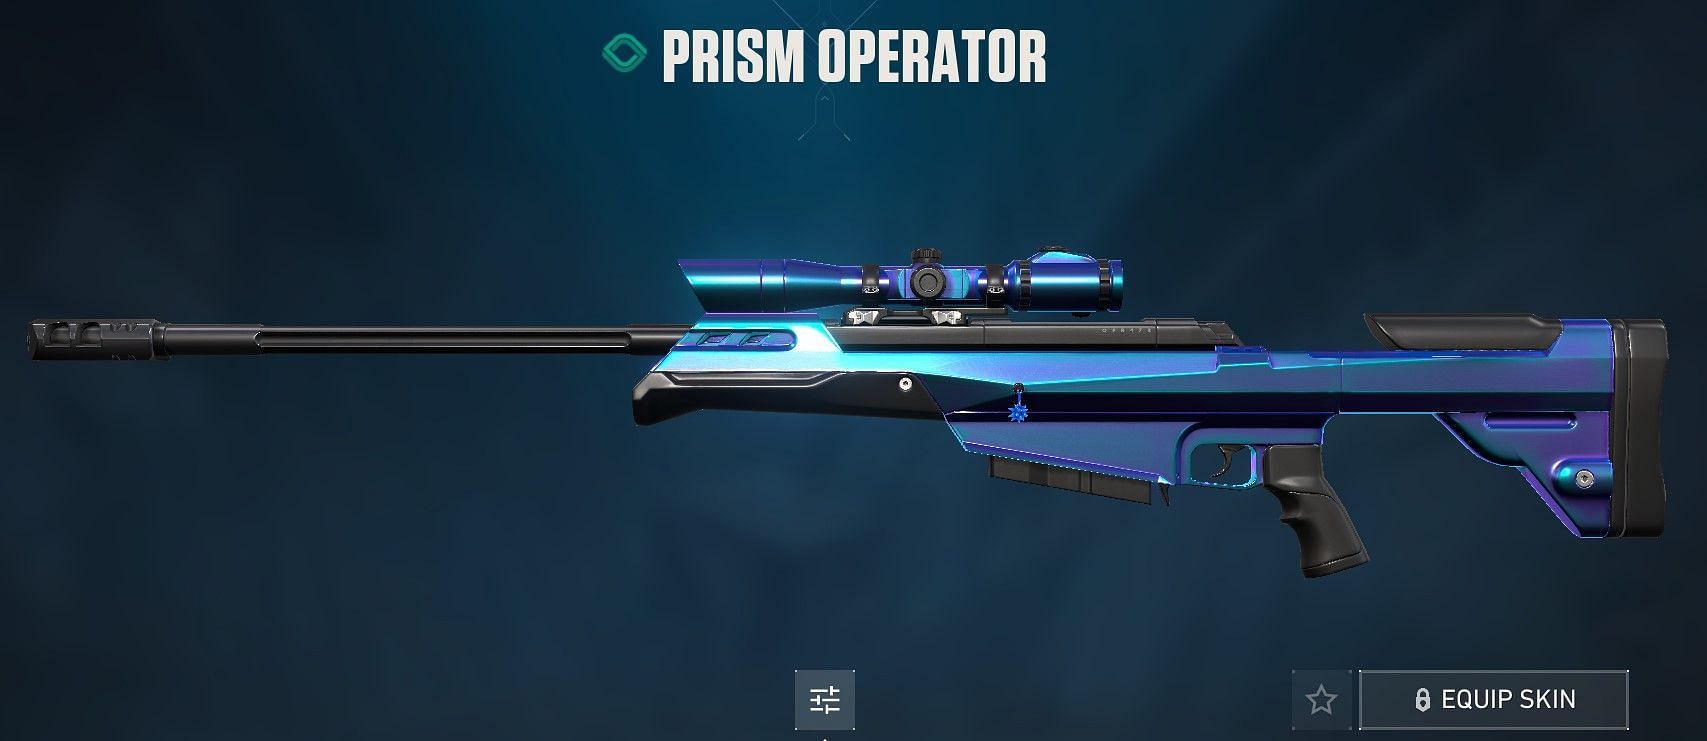 Prism Operator (Image via Riot Games)